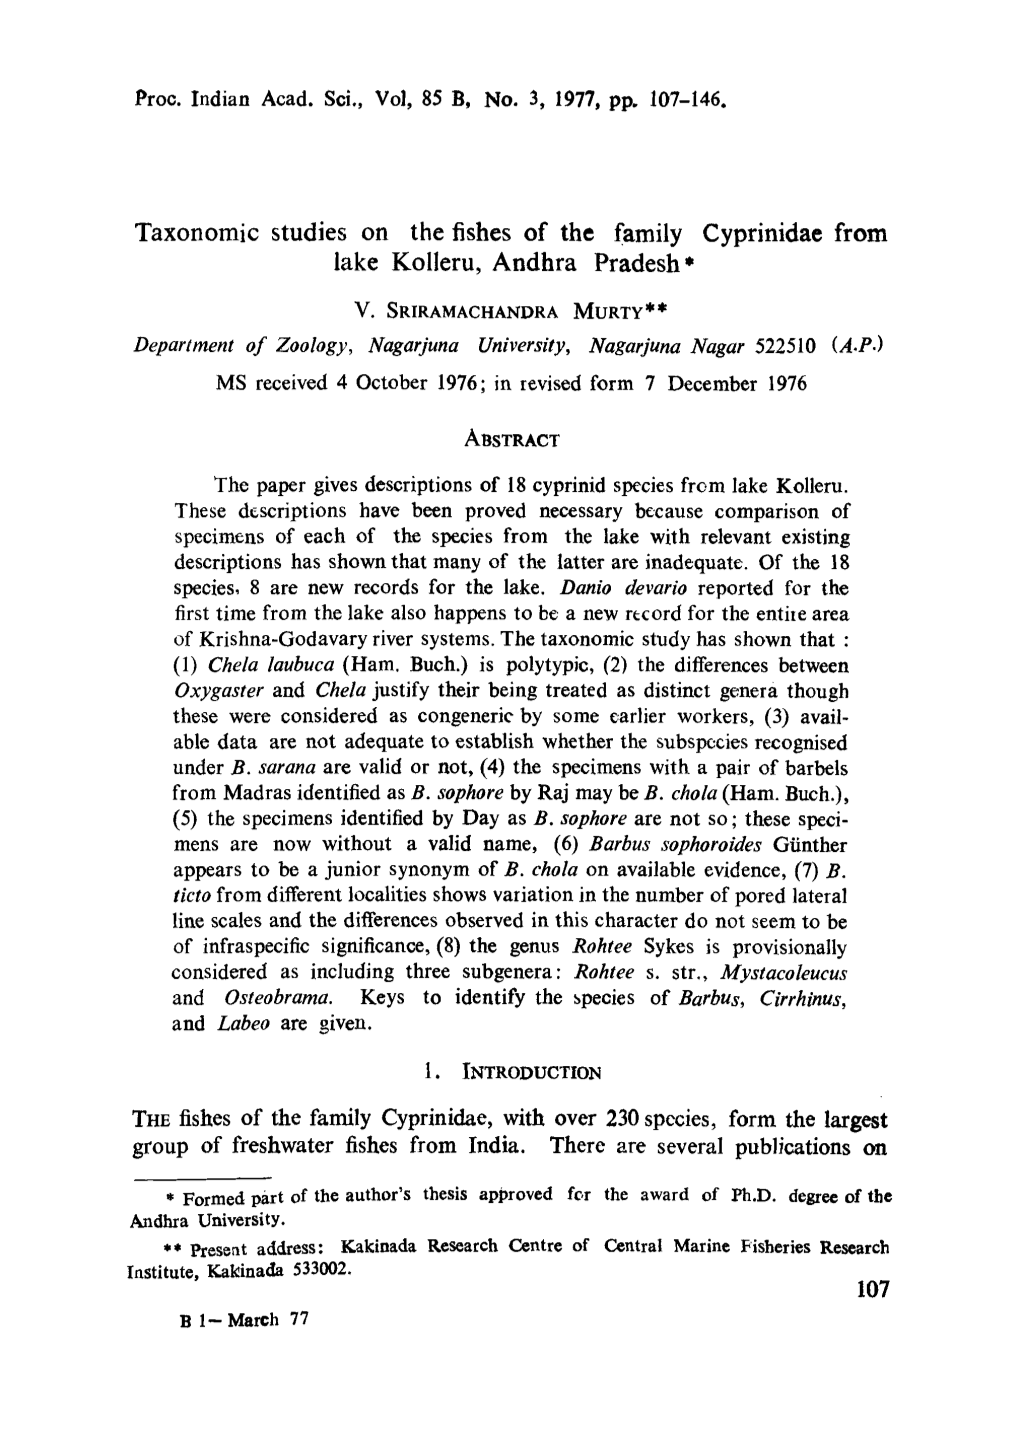 Taxonomic Studies on the Fishes of the Family Cyprinidae from Lake Kolleru, Andhra Pradesh*